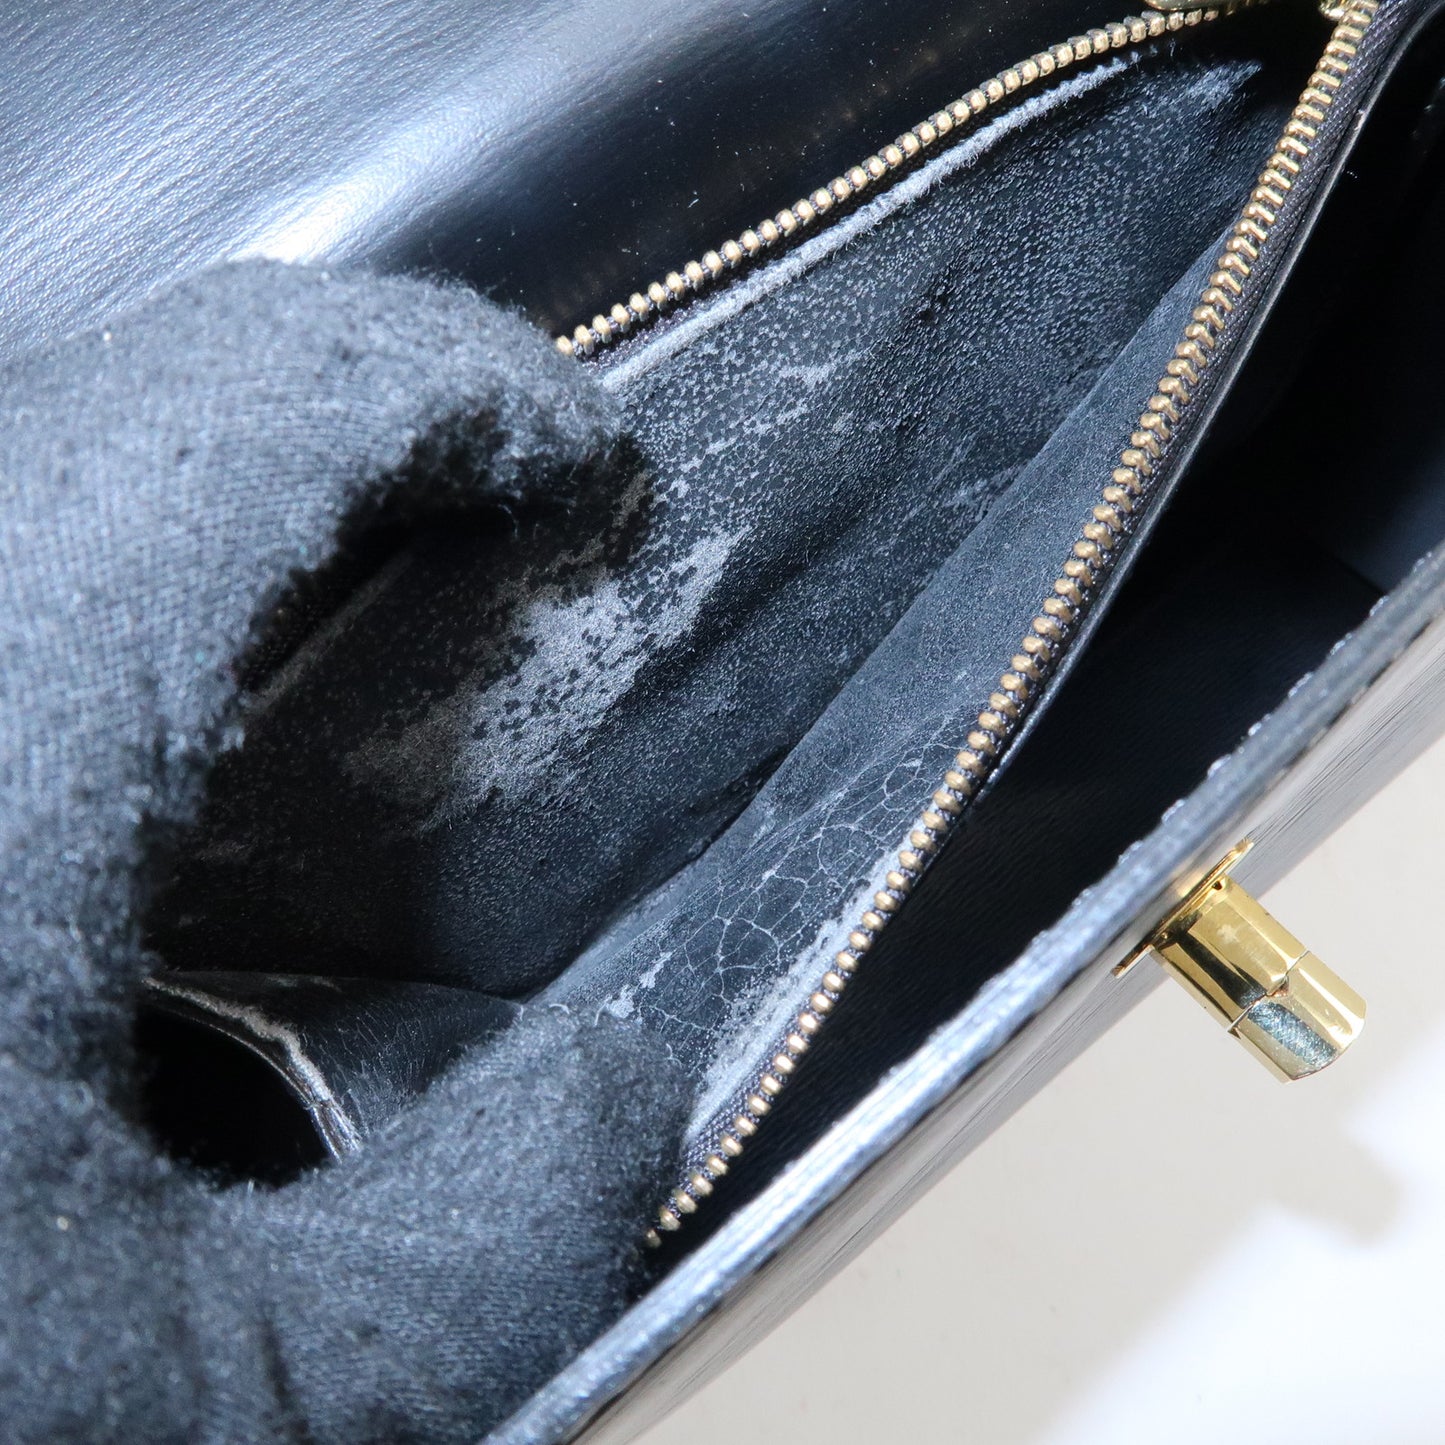 Louis Vuitton Epi Leather Malesherbes Hand Bag Black M52372